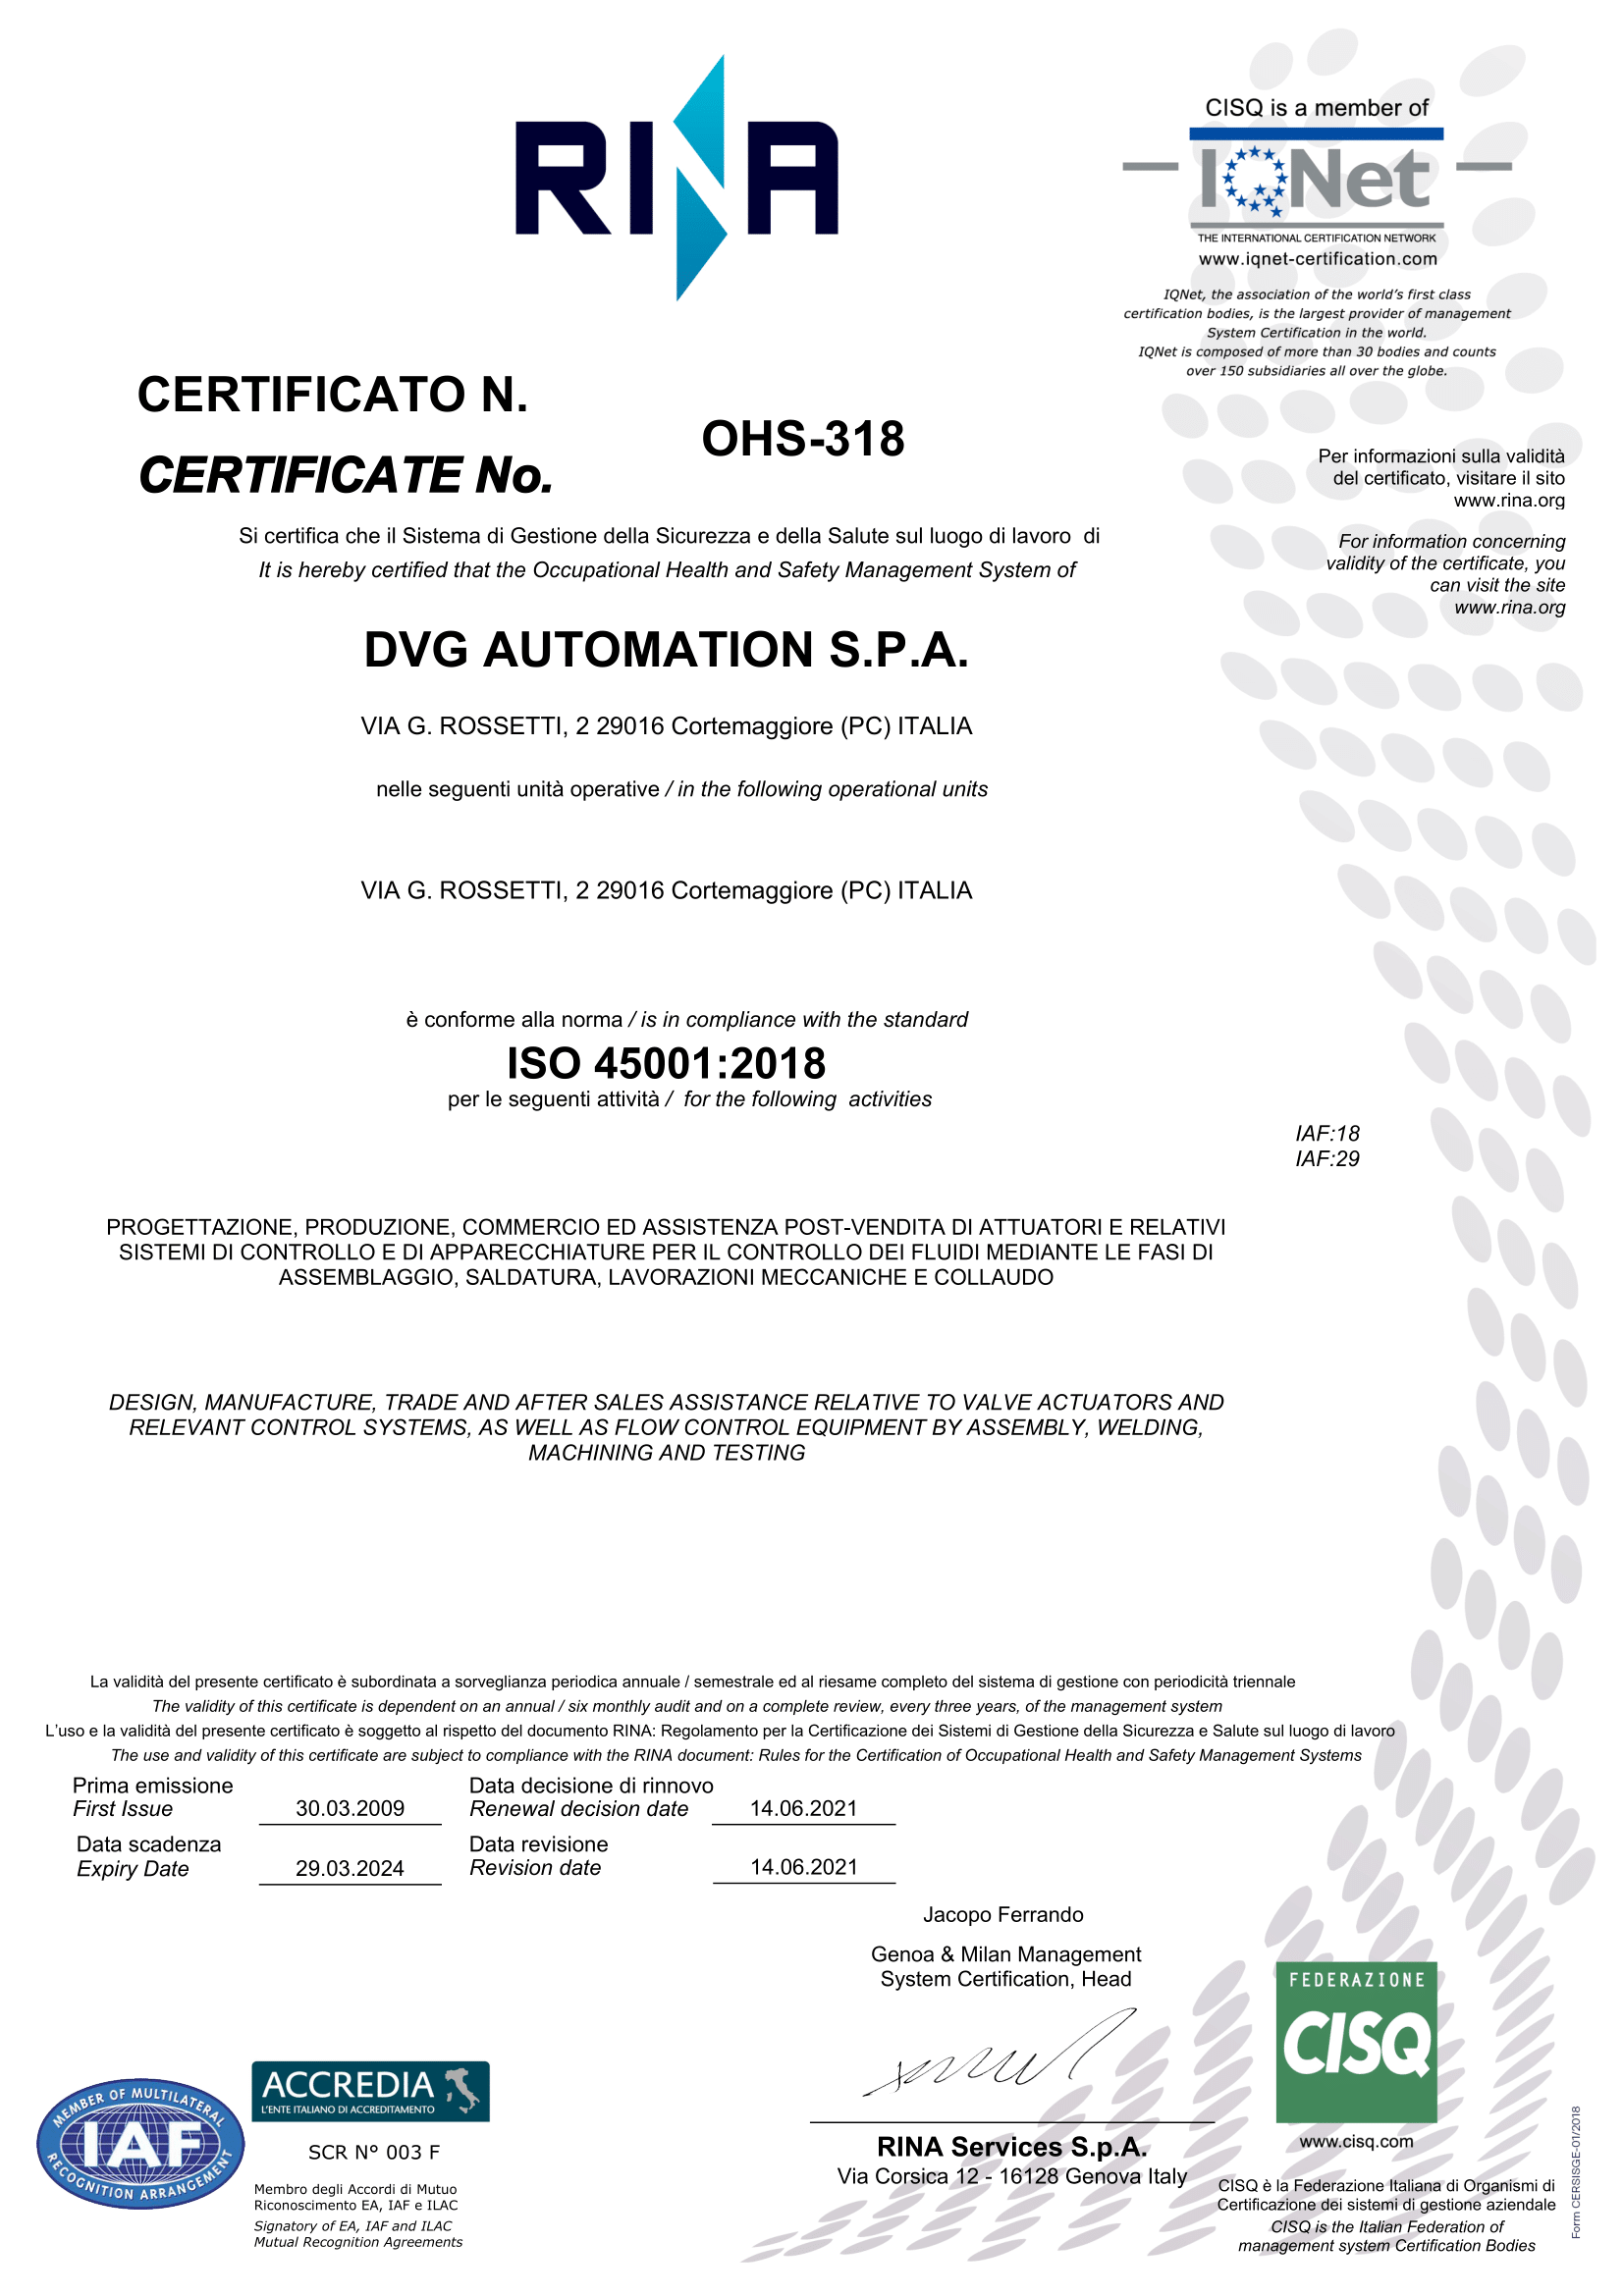 ISO 45001 dvg